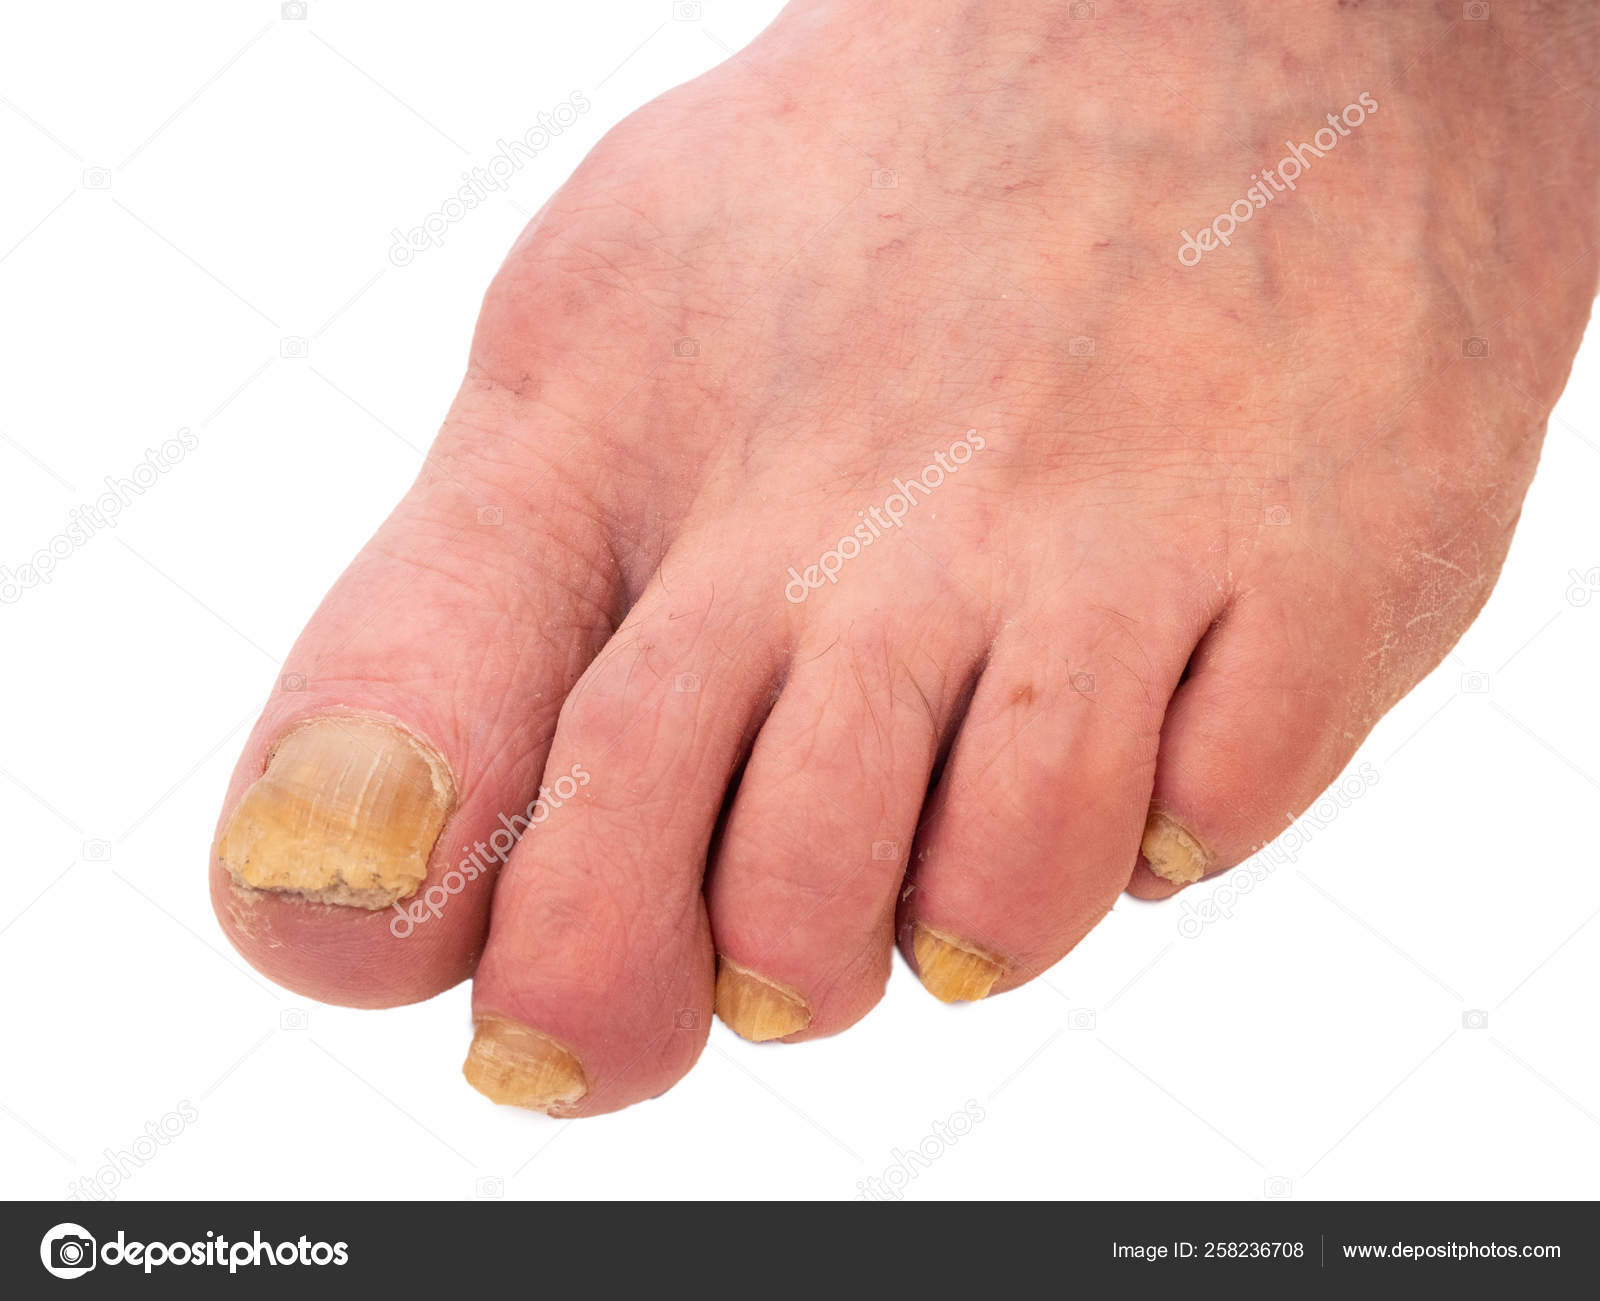 gomba skin nail foot)